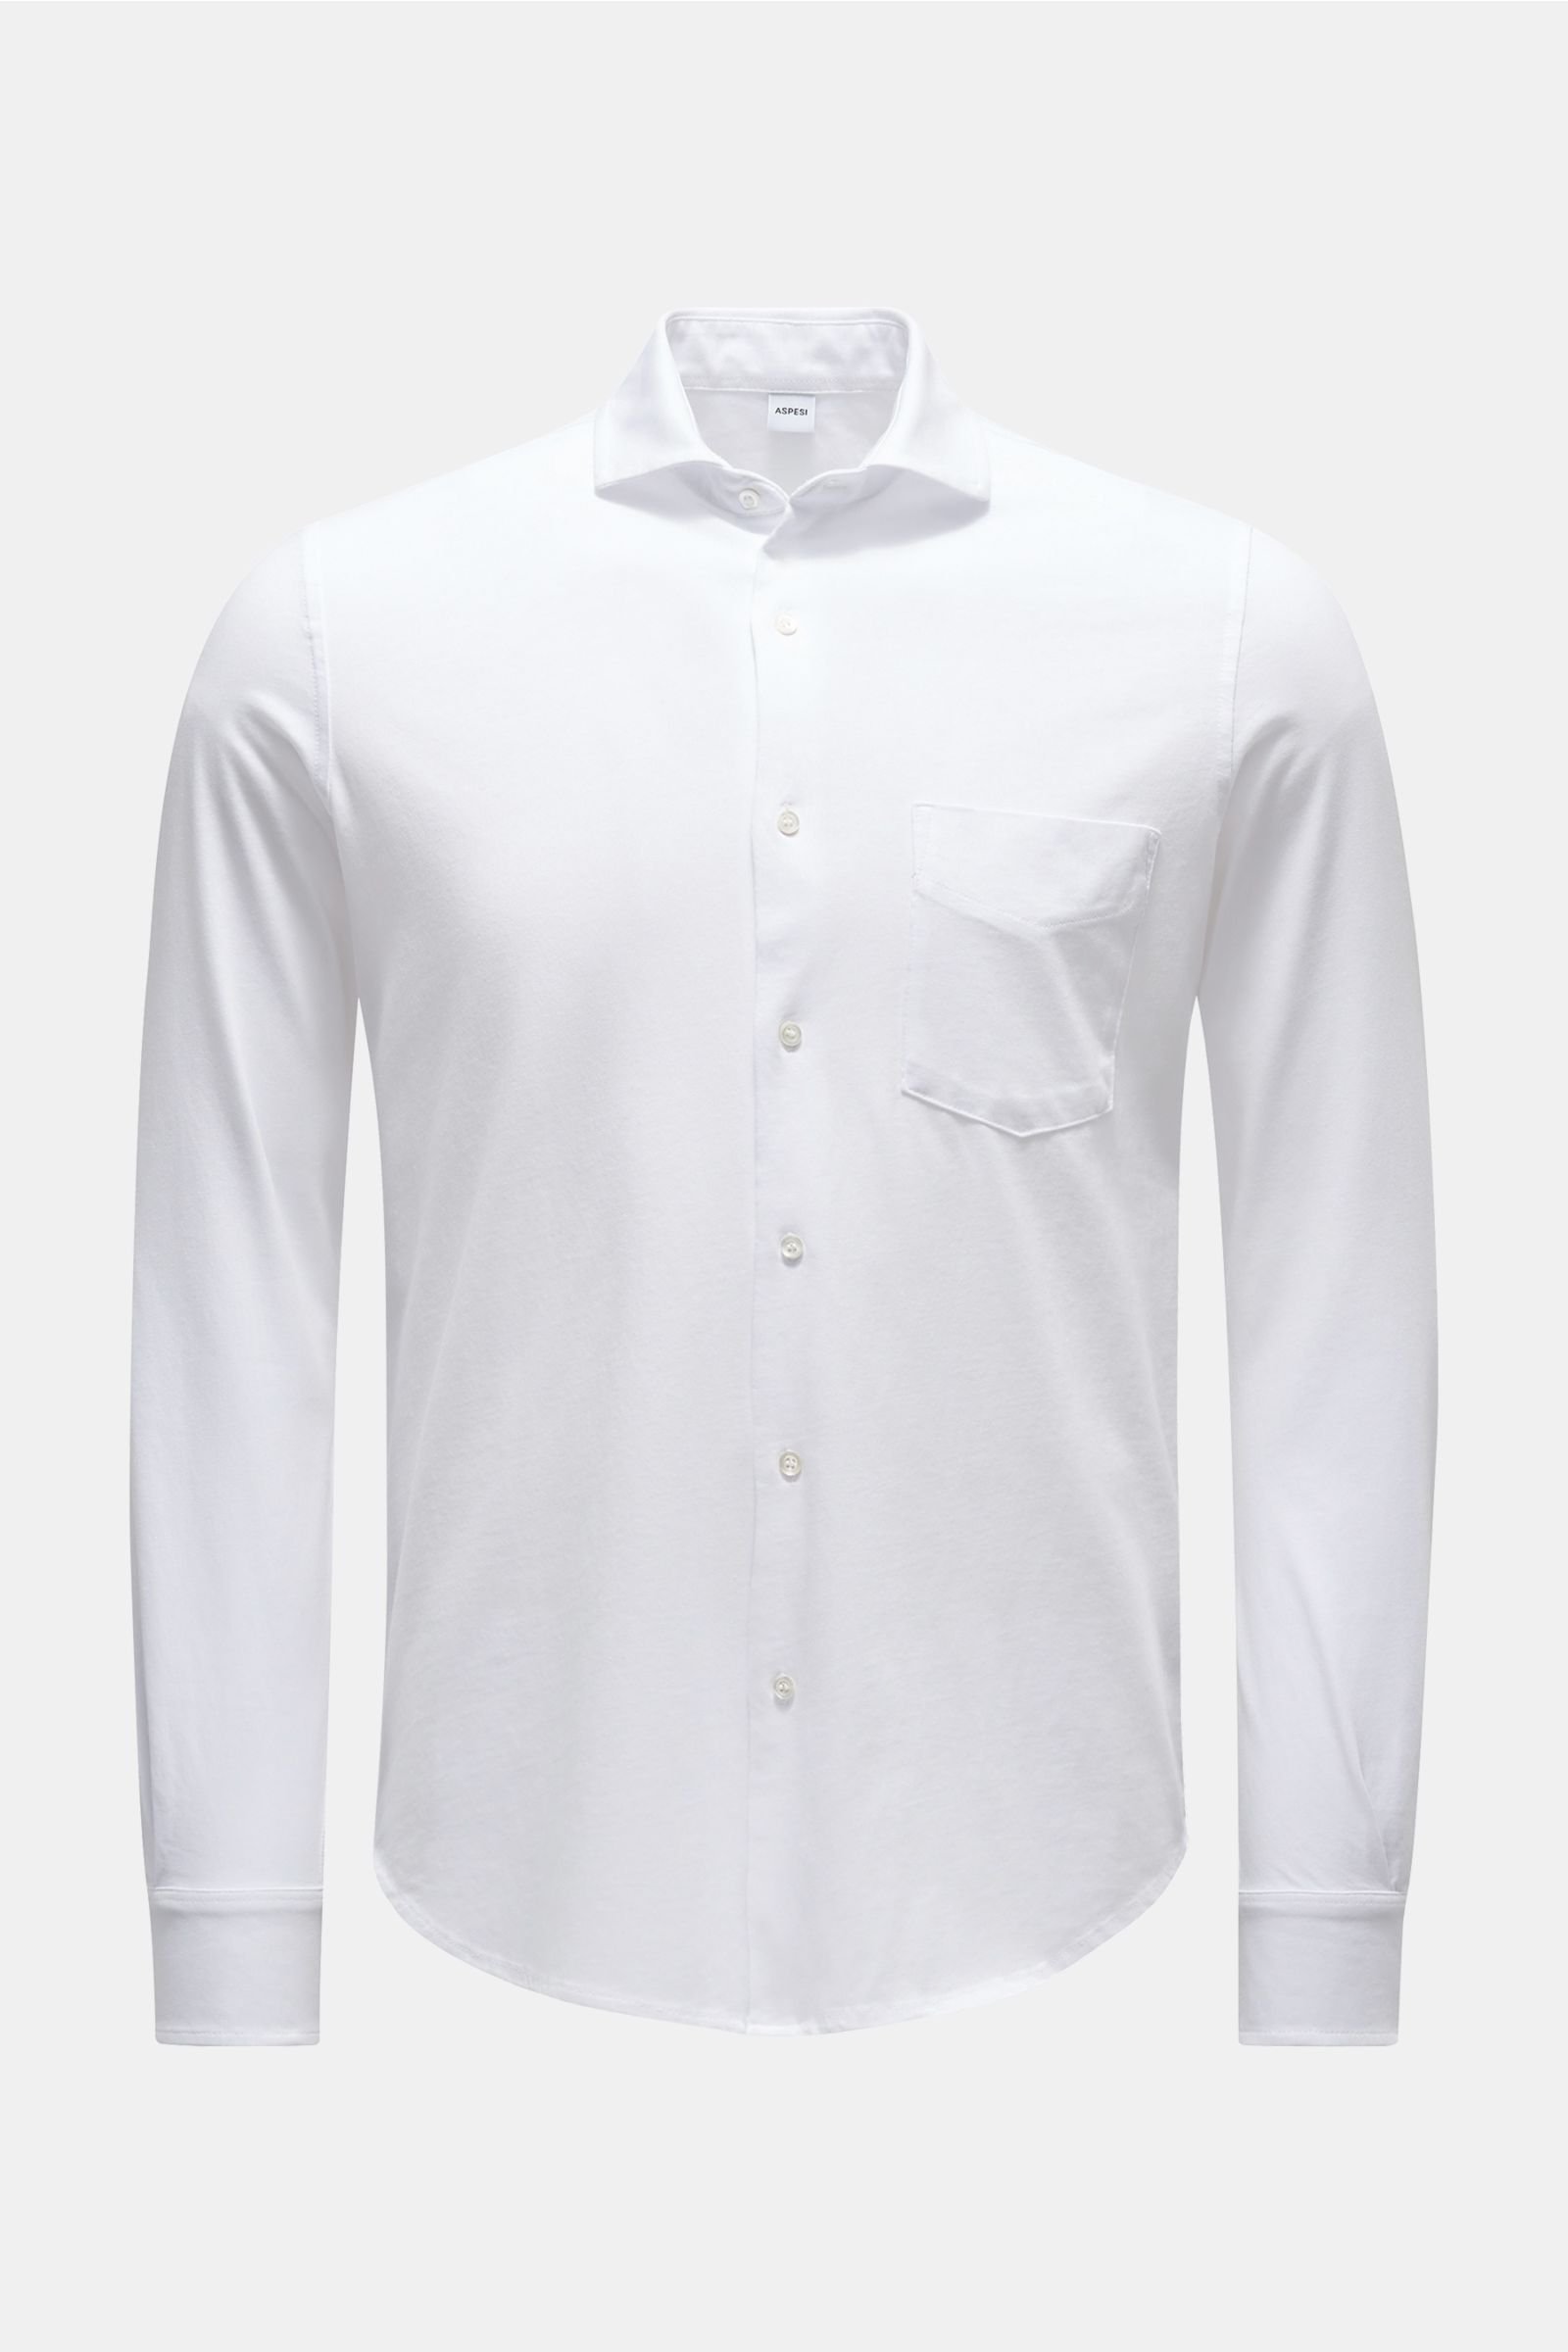 Jersey shirt slim collar white